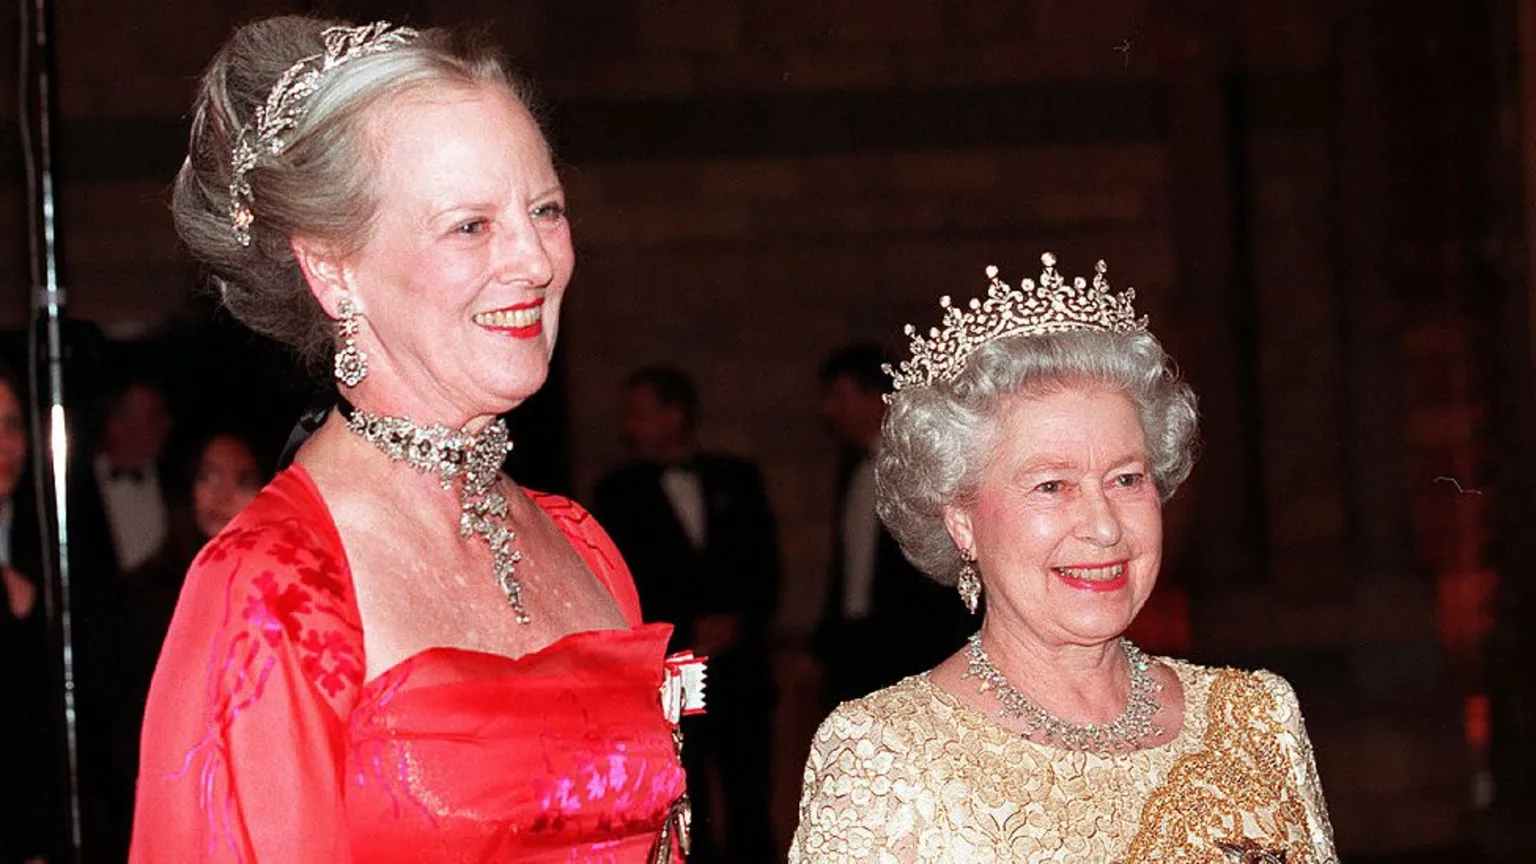 Queen Margrethe II: Danish monarch announces abdication live on TV (bbc.com)